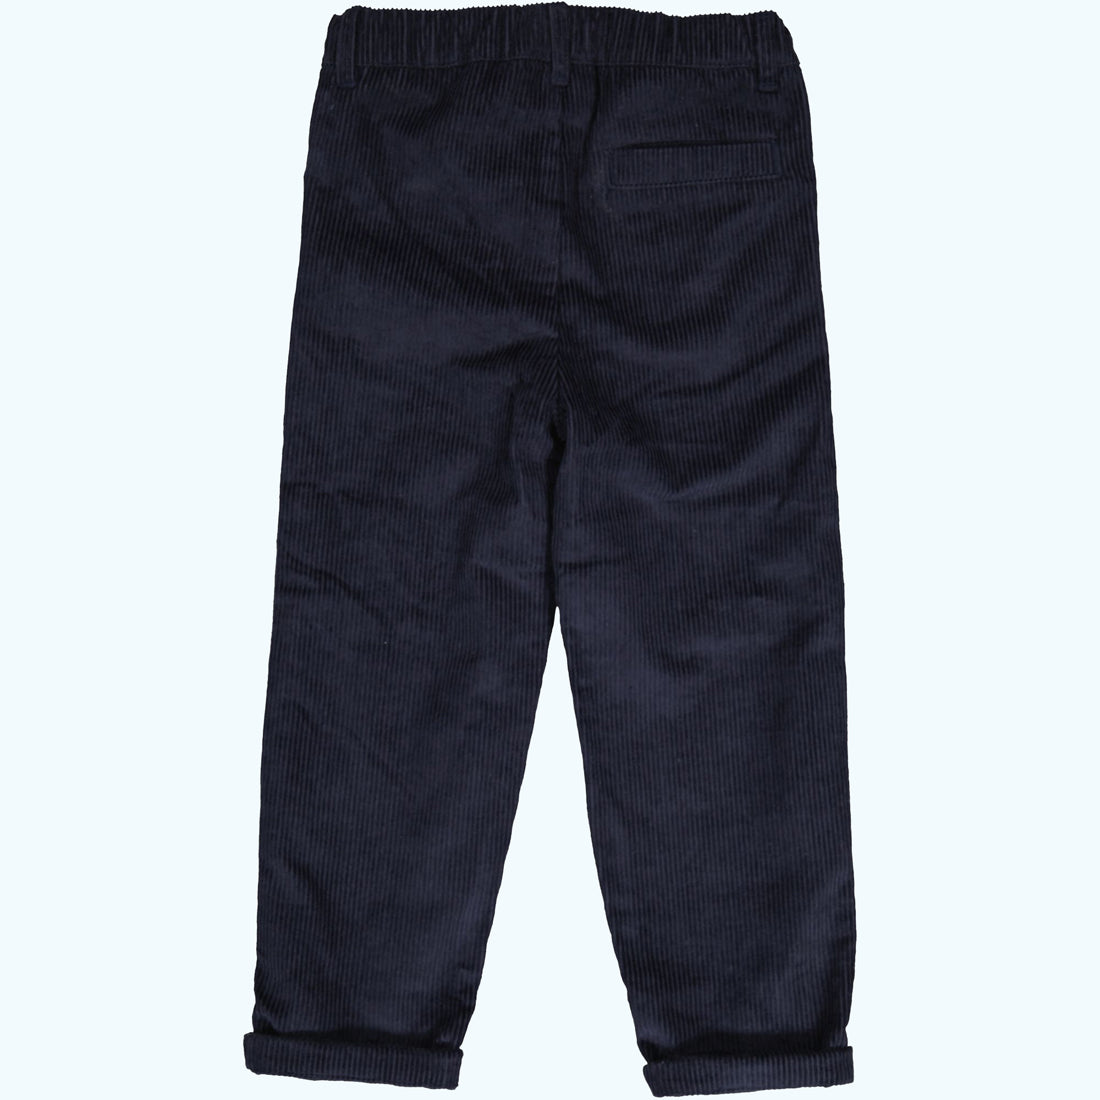 Geggamoja® Organic Cotton Baby/Kids Comfy Pants - SOLID LIGHT BLUE